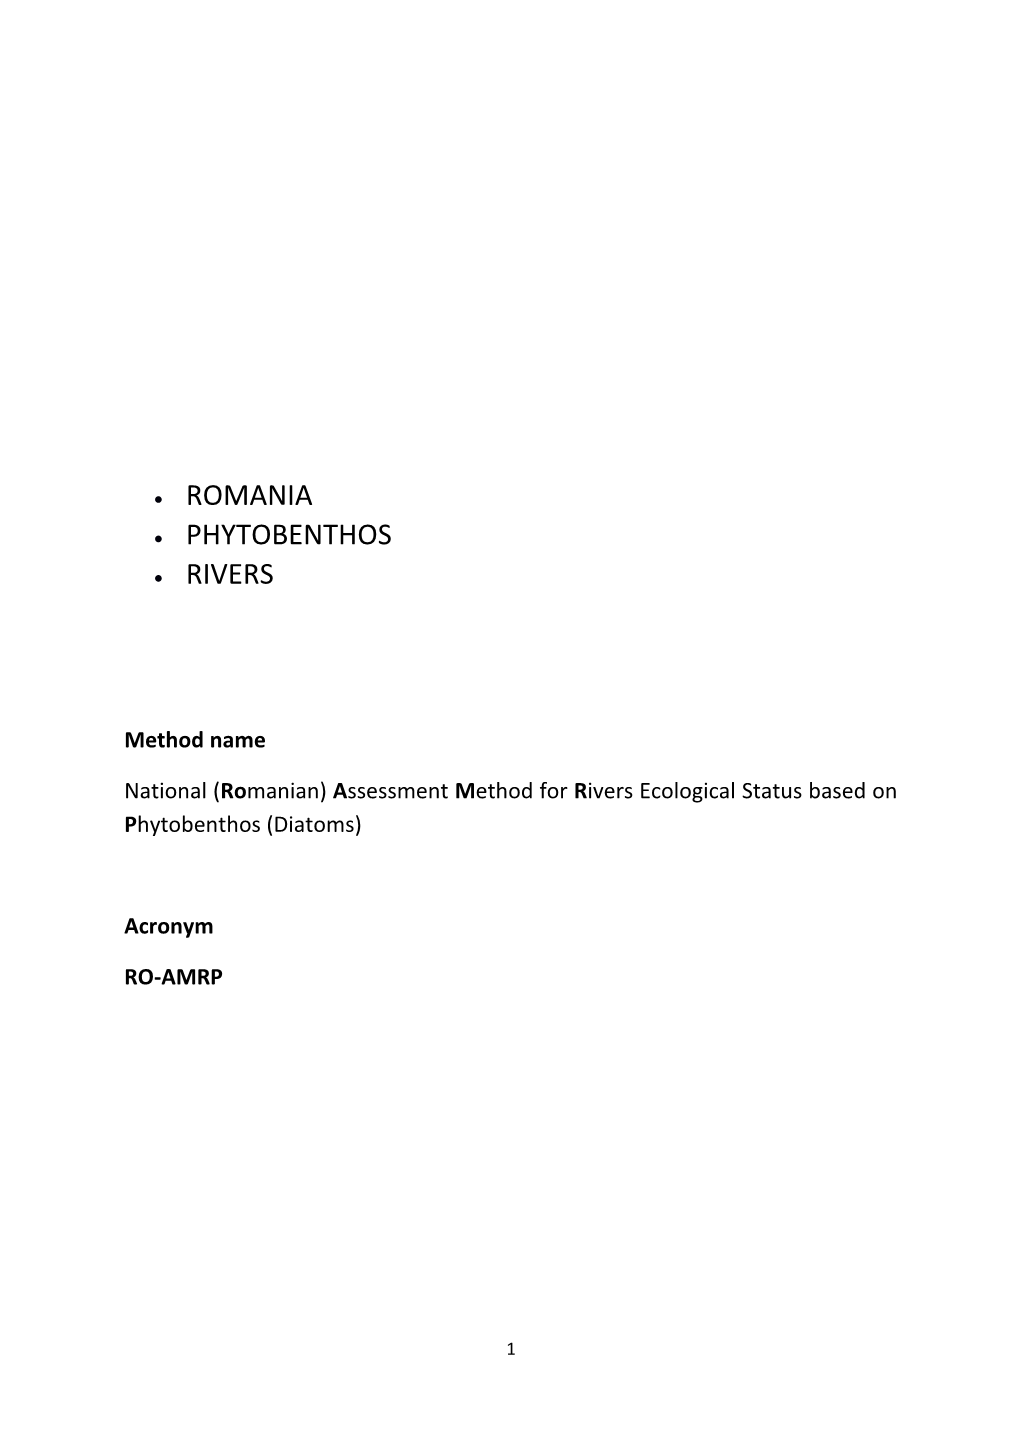 National ( Romanian) Assessment Method for R Ivers Ecological Status Based on Phytobenthos